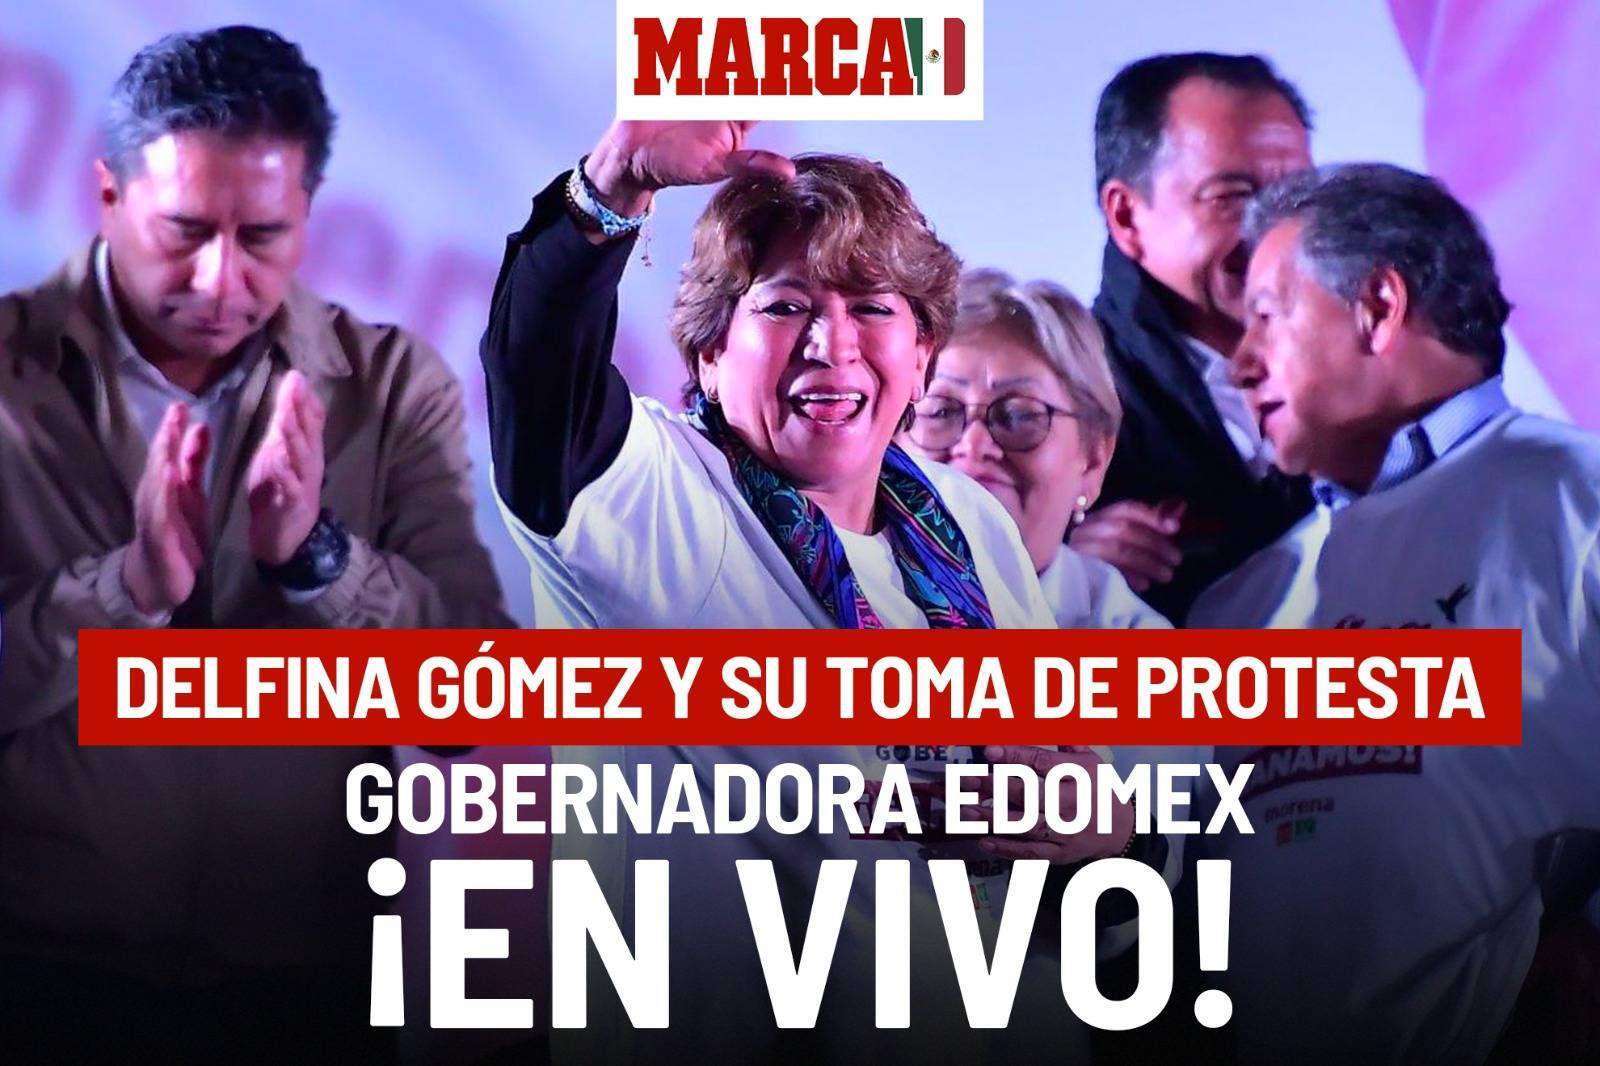 Toma de protesta Delfina Gómez EN VIVO hoy. Mensaje Gobernadora Edomex